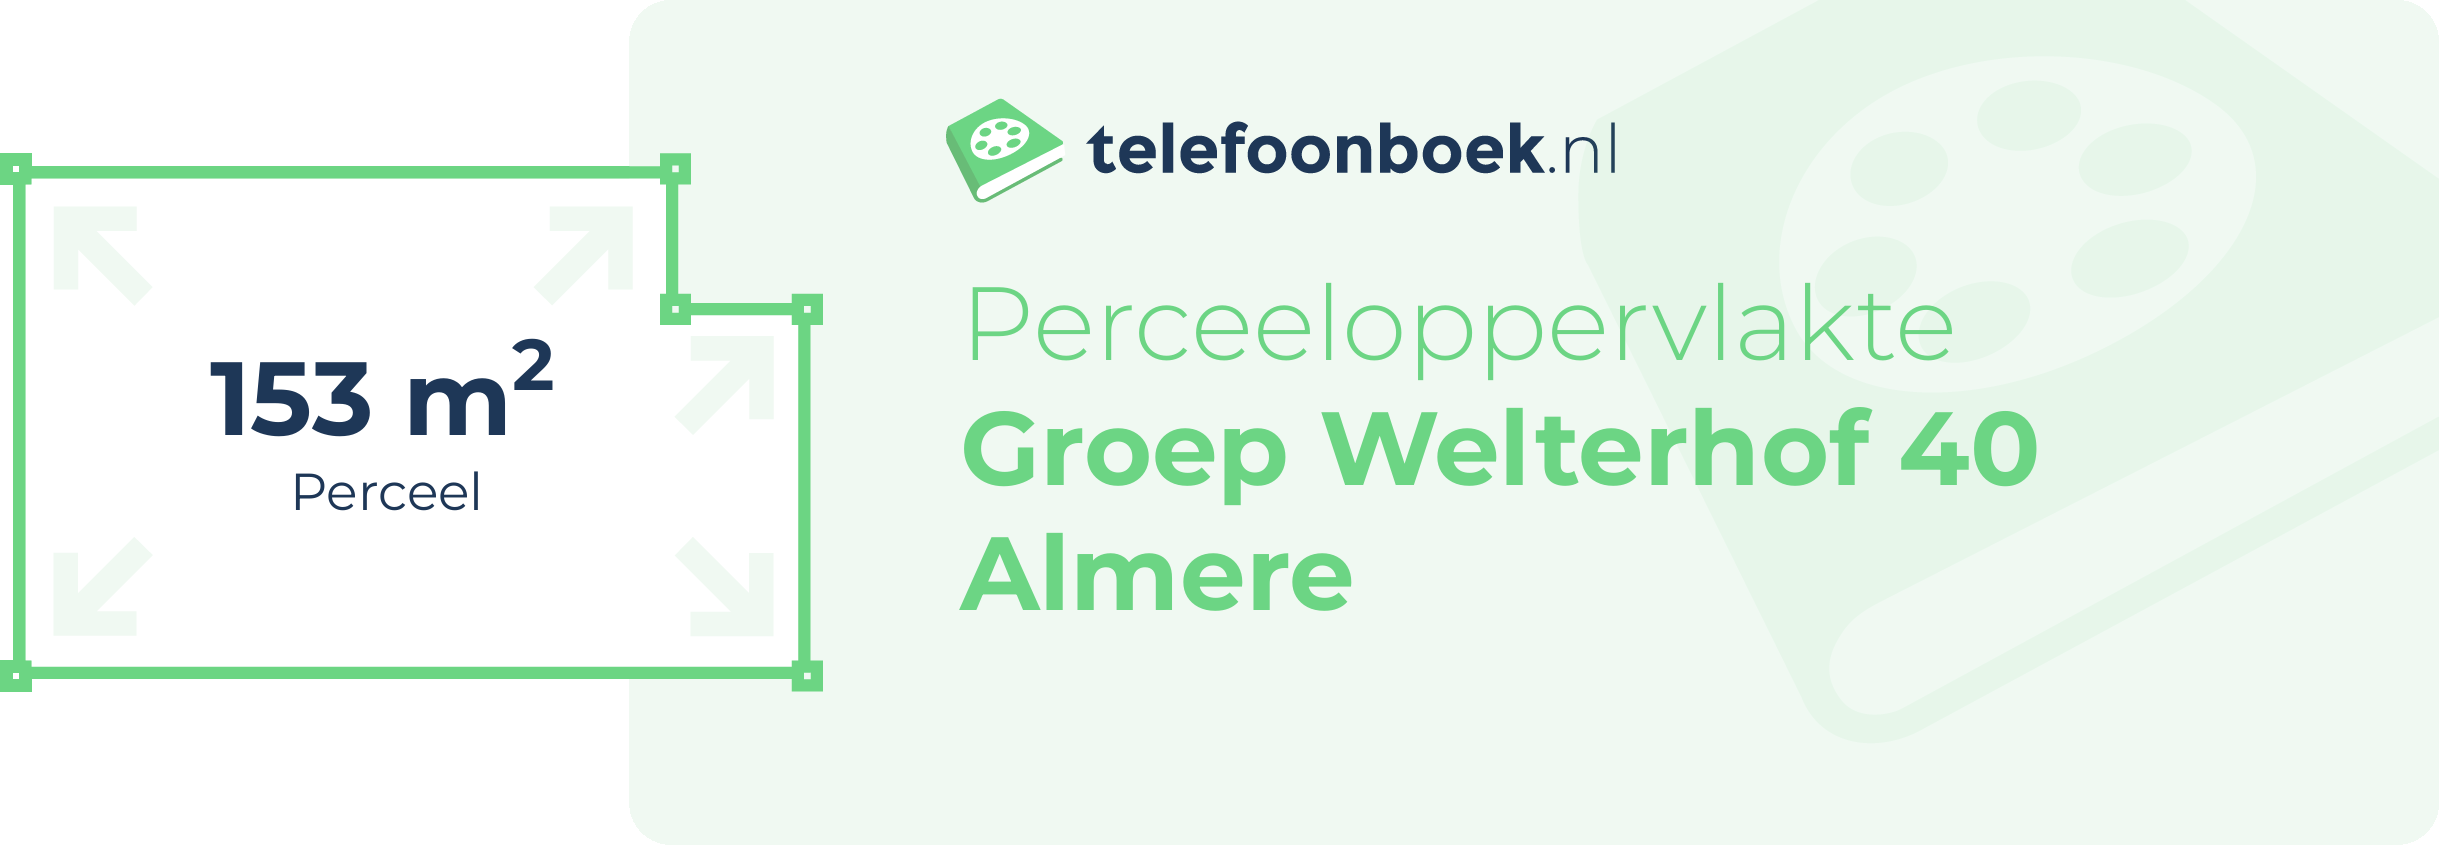 Perceeloppervlakte Groep Welterhof 40 Almere